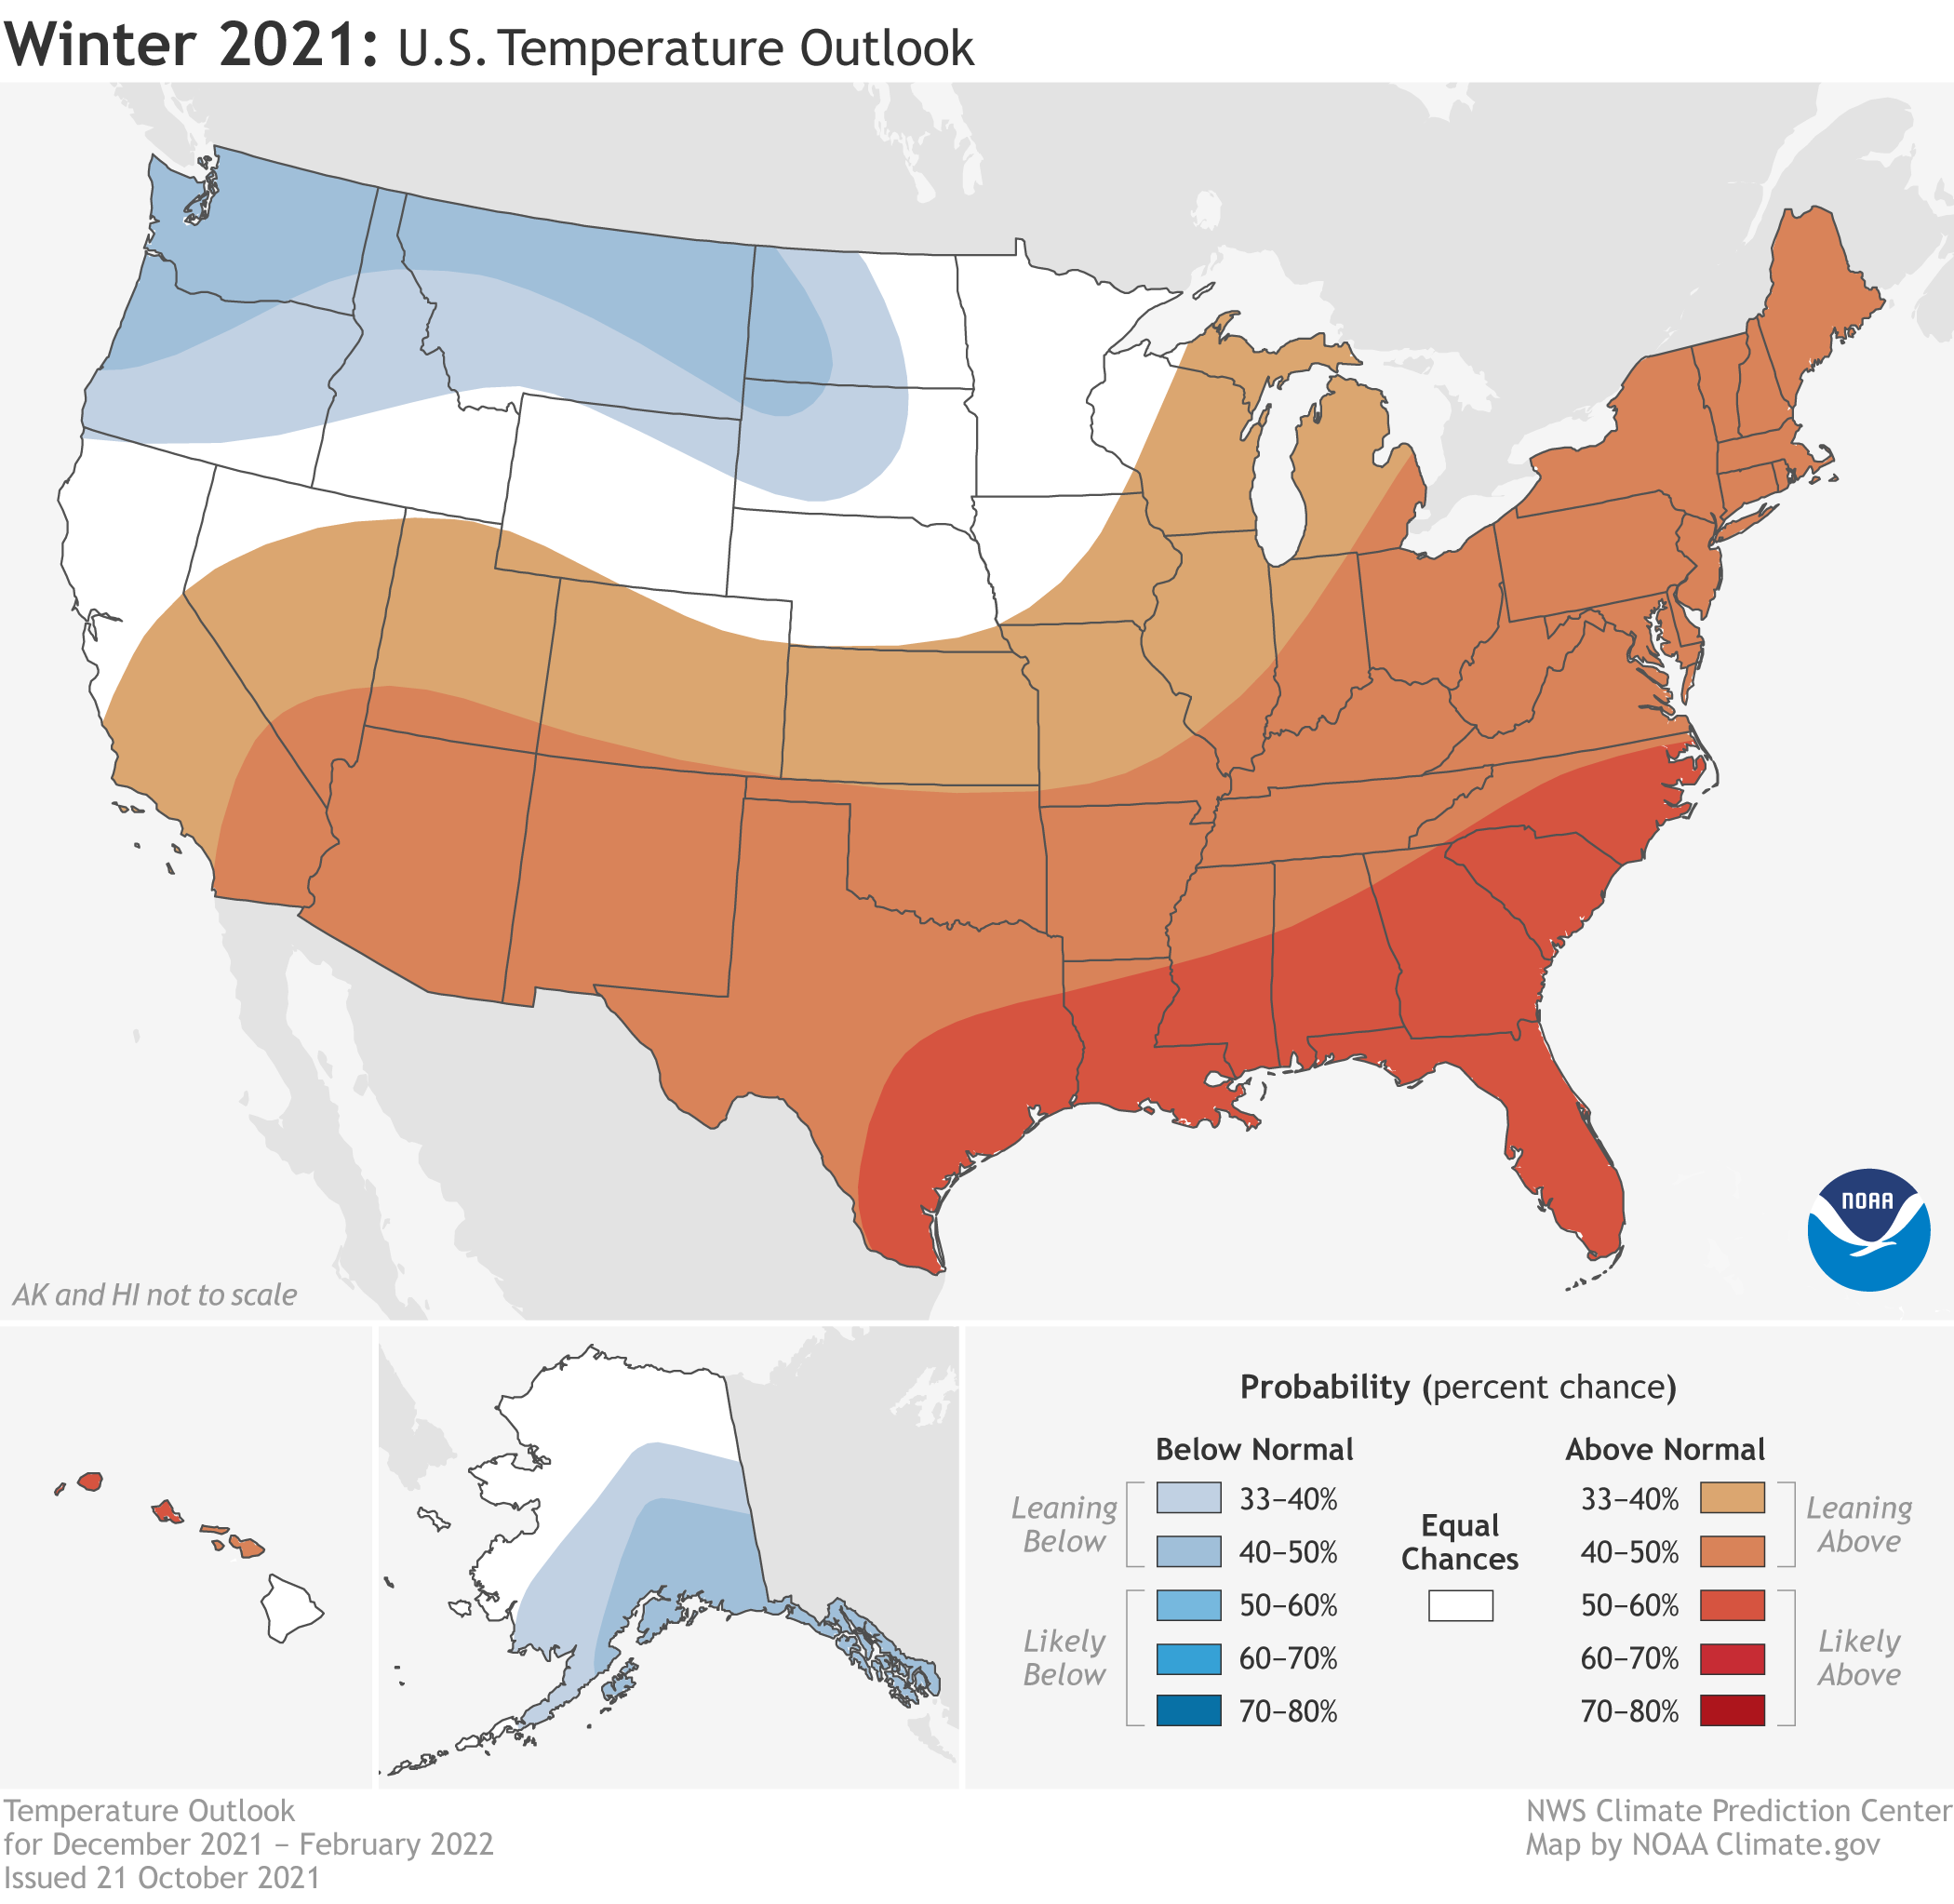 winteroutlook_seasonal_temperature_2021_2100.png NOAA Climate.gov